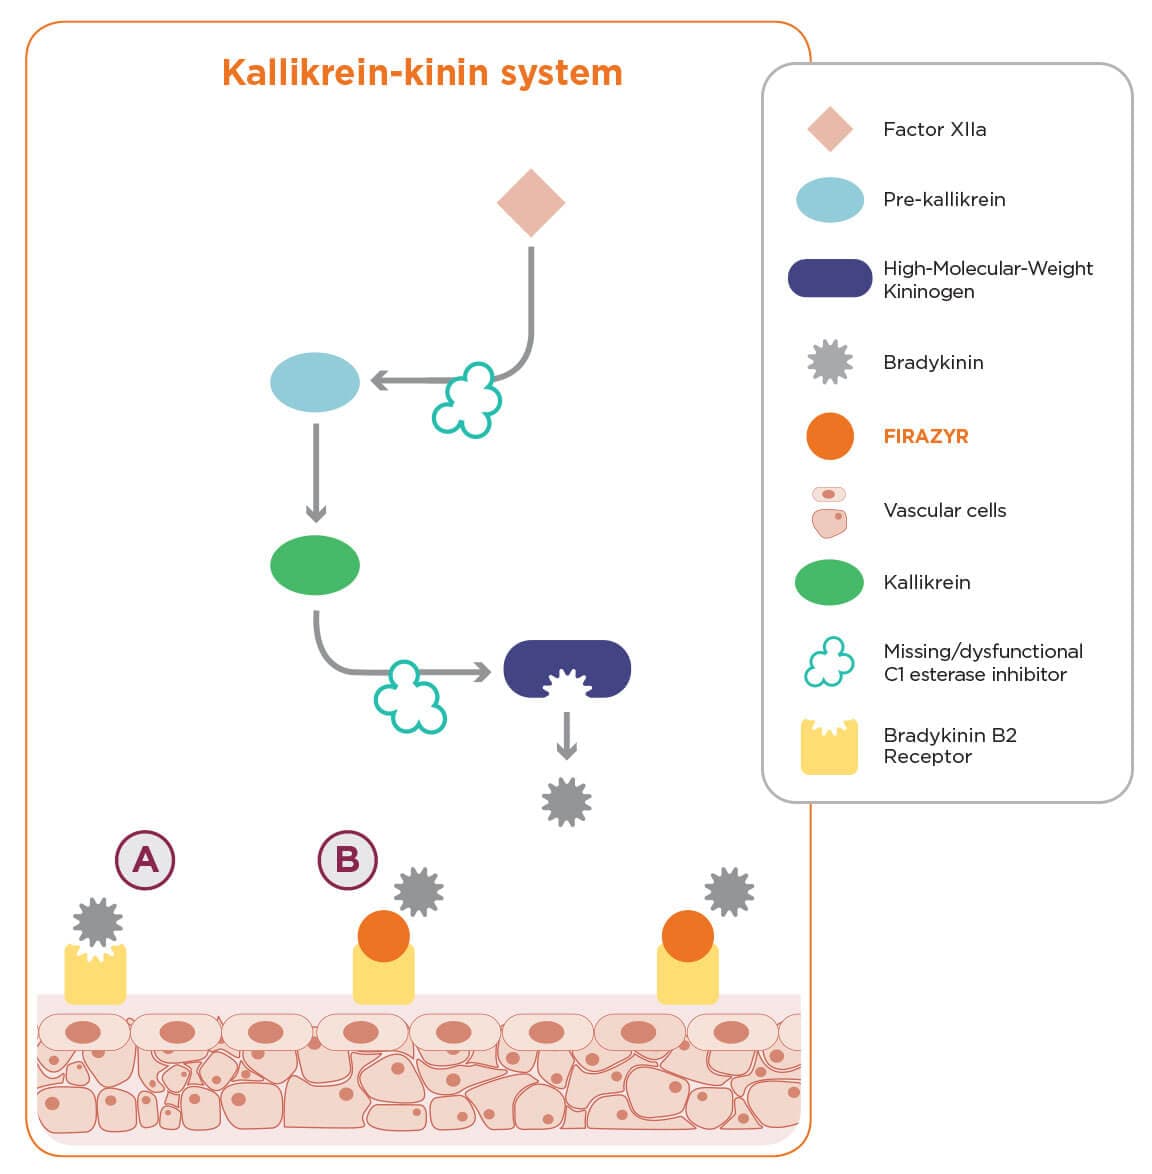 Kallikrein-kinin system showing how FIRAZYR® is a proven bradykinin B2-receptor antagonist used to treat HAE attacks.